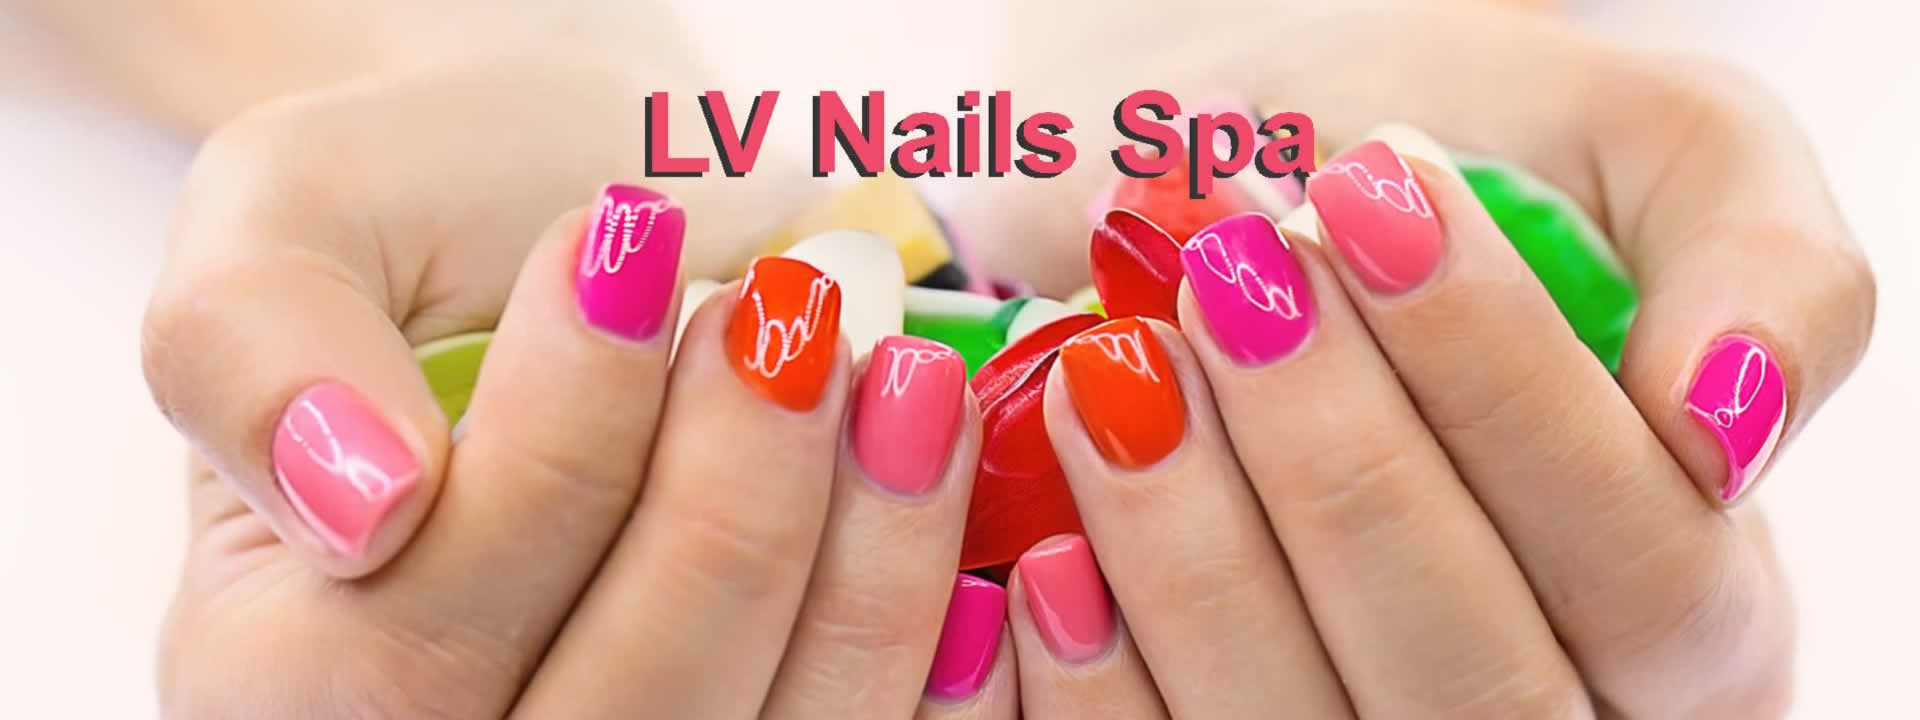 LV Nails Spa Texas Missouri City